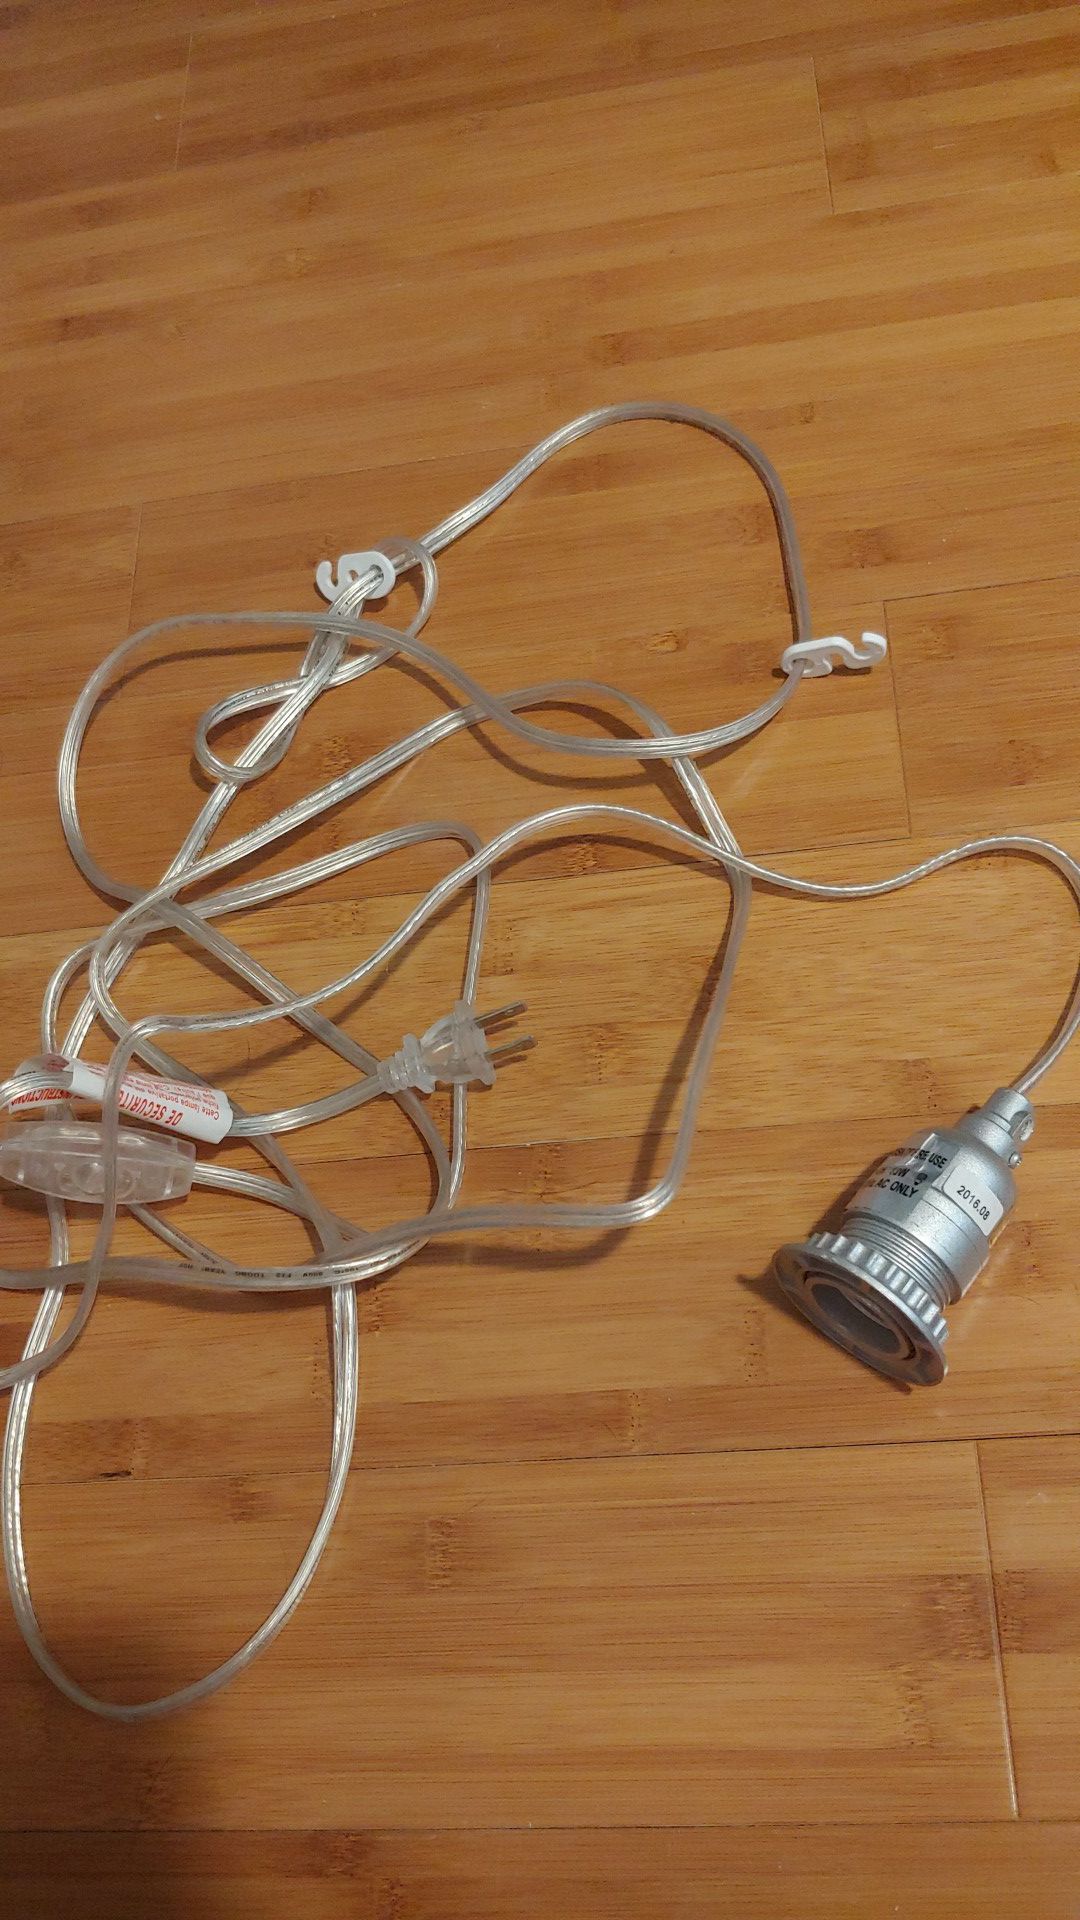 Plug in lamp converter